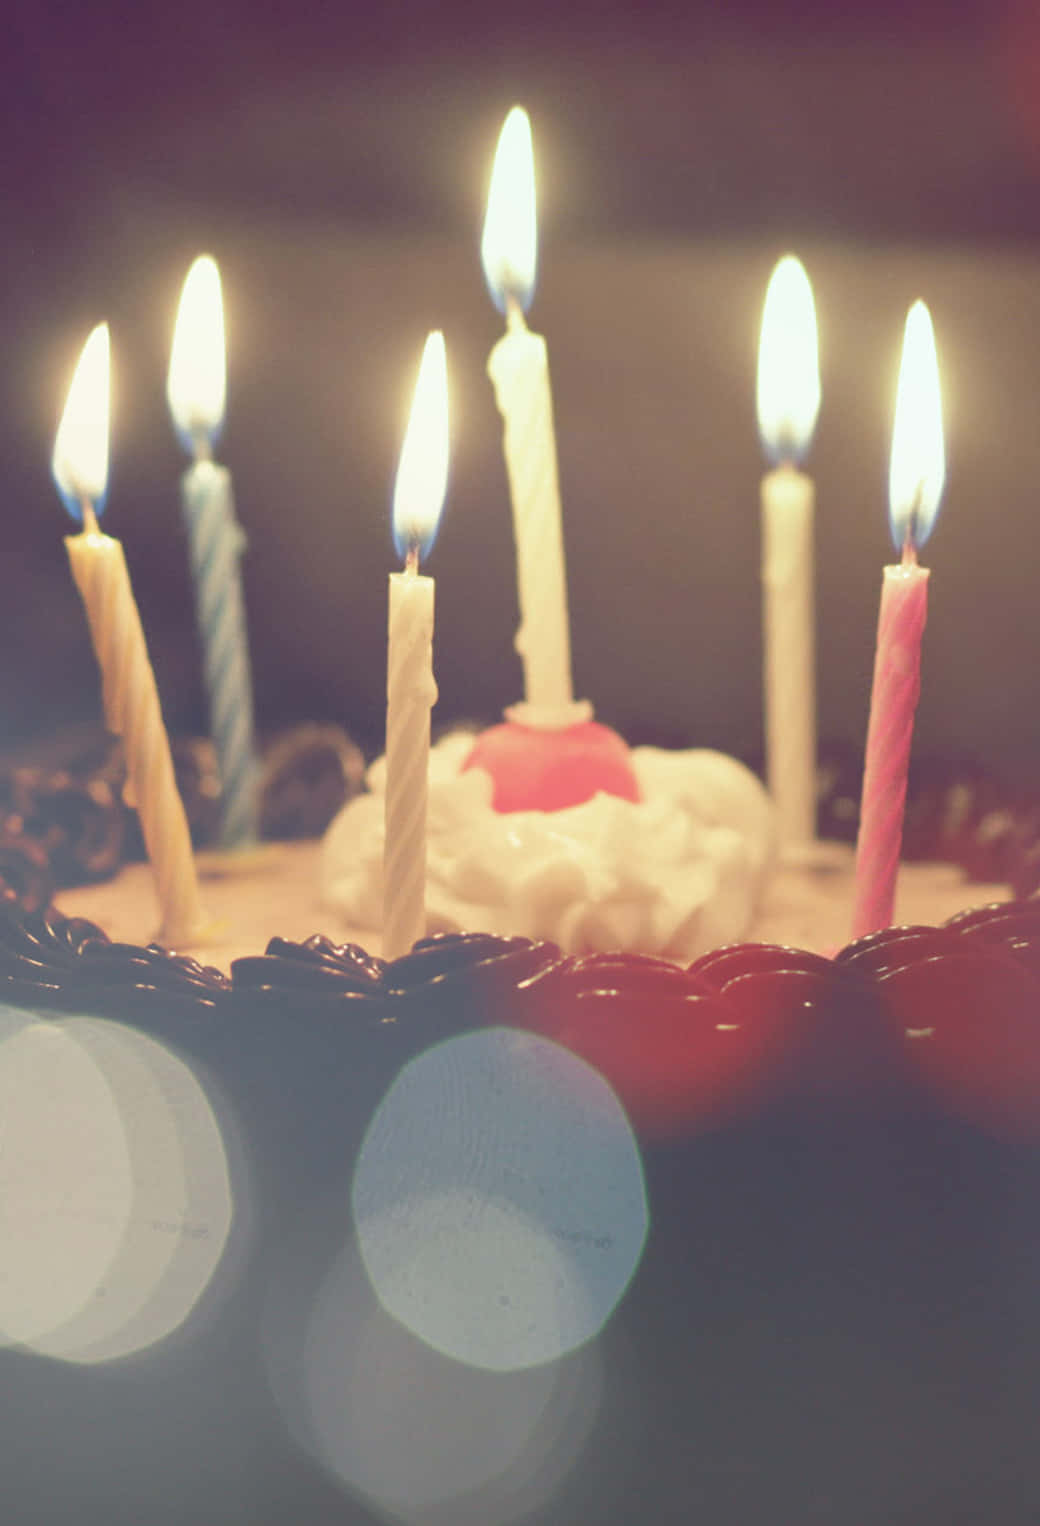 Cake Maker: Happy Birthday - Apps on Google Play